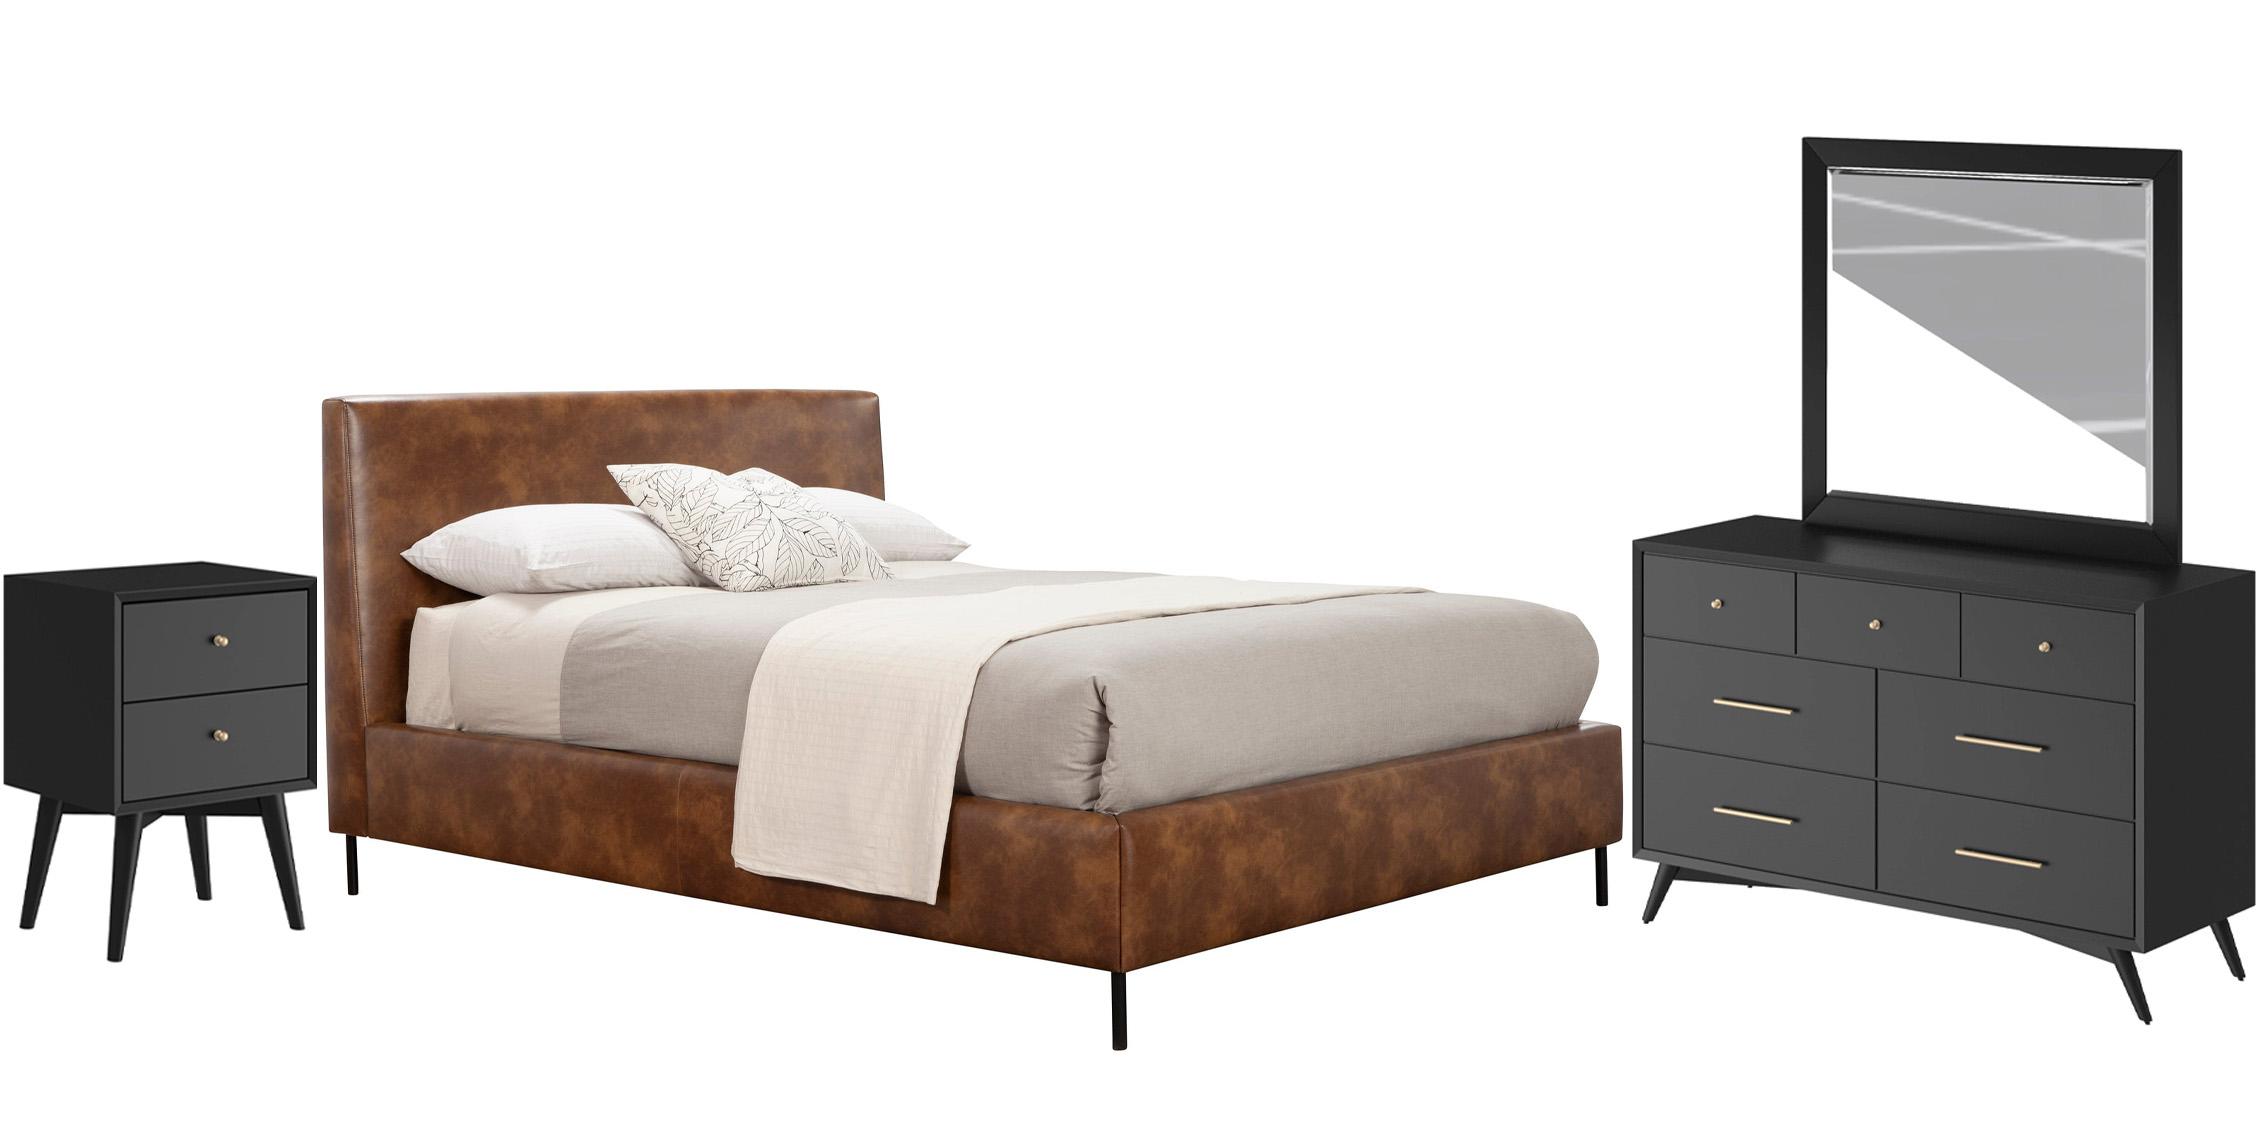 Modern, Rustic Platform Bedroom Set SOPHIA/FLYNN 6902CK-BRN-Set-4-BLK in Brown, Black Faux Leather